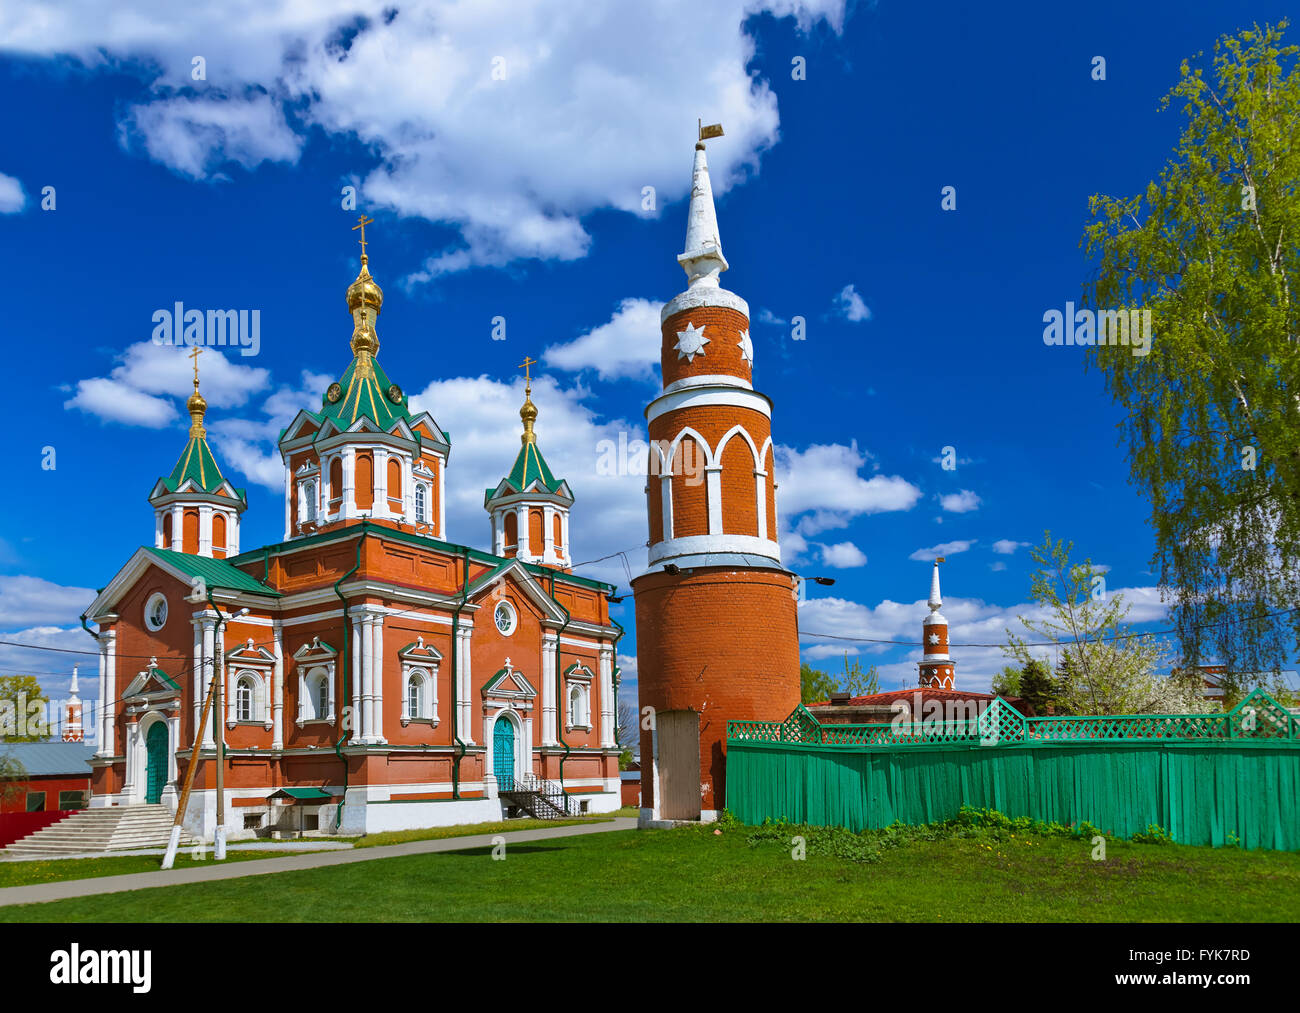 Uspensky Brusensky monastery in Kolomna Kremlin - Russia - Moscow region Stock Photo